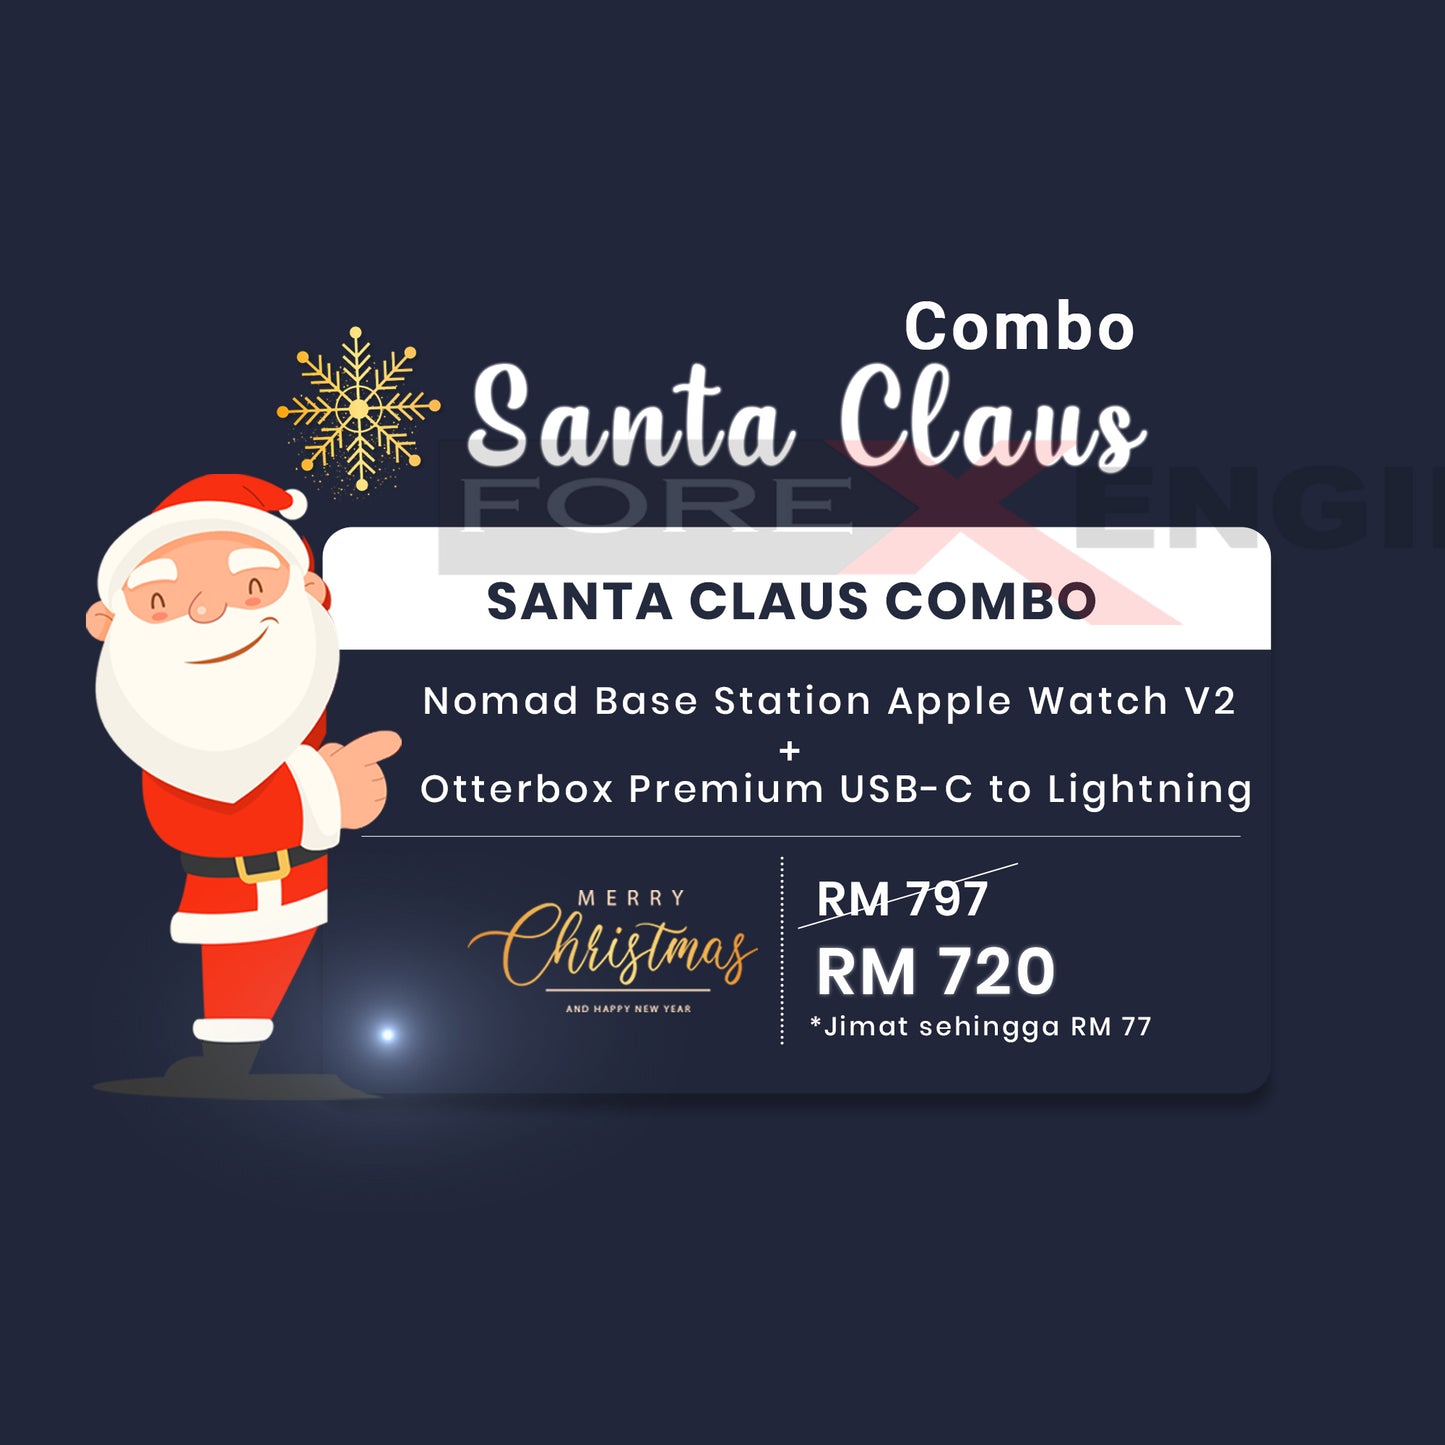 [Santa Claus COMBO] Nomad Base Station Apple Watch V2 + Otterbox Premium USB-C to Lightning (Barcode: 856500018256 + 840104218228 )